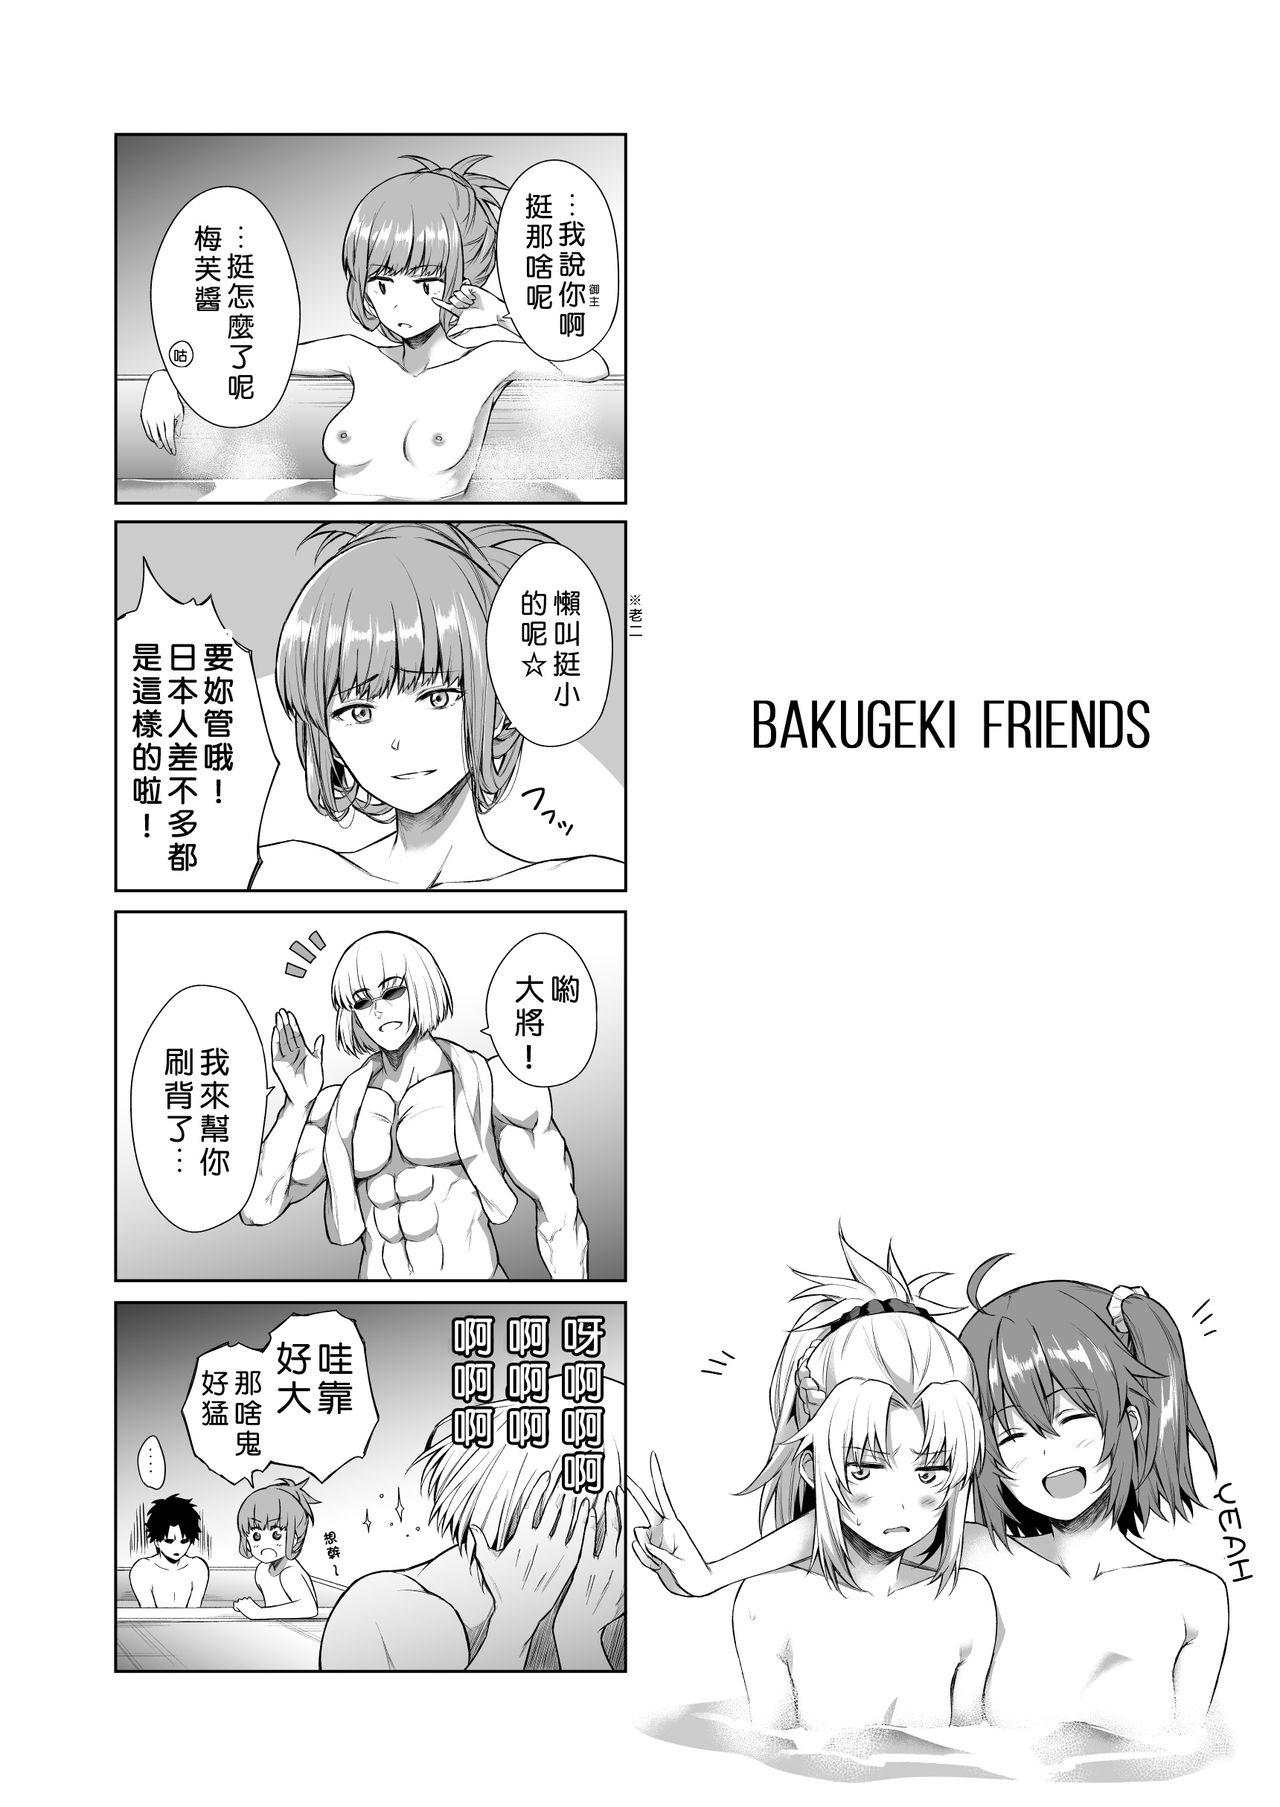 Creampie BAKUGEKI FRIENDS - Fate grand order Classy - Page 2